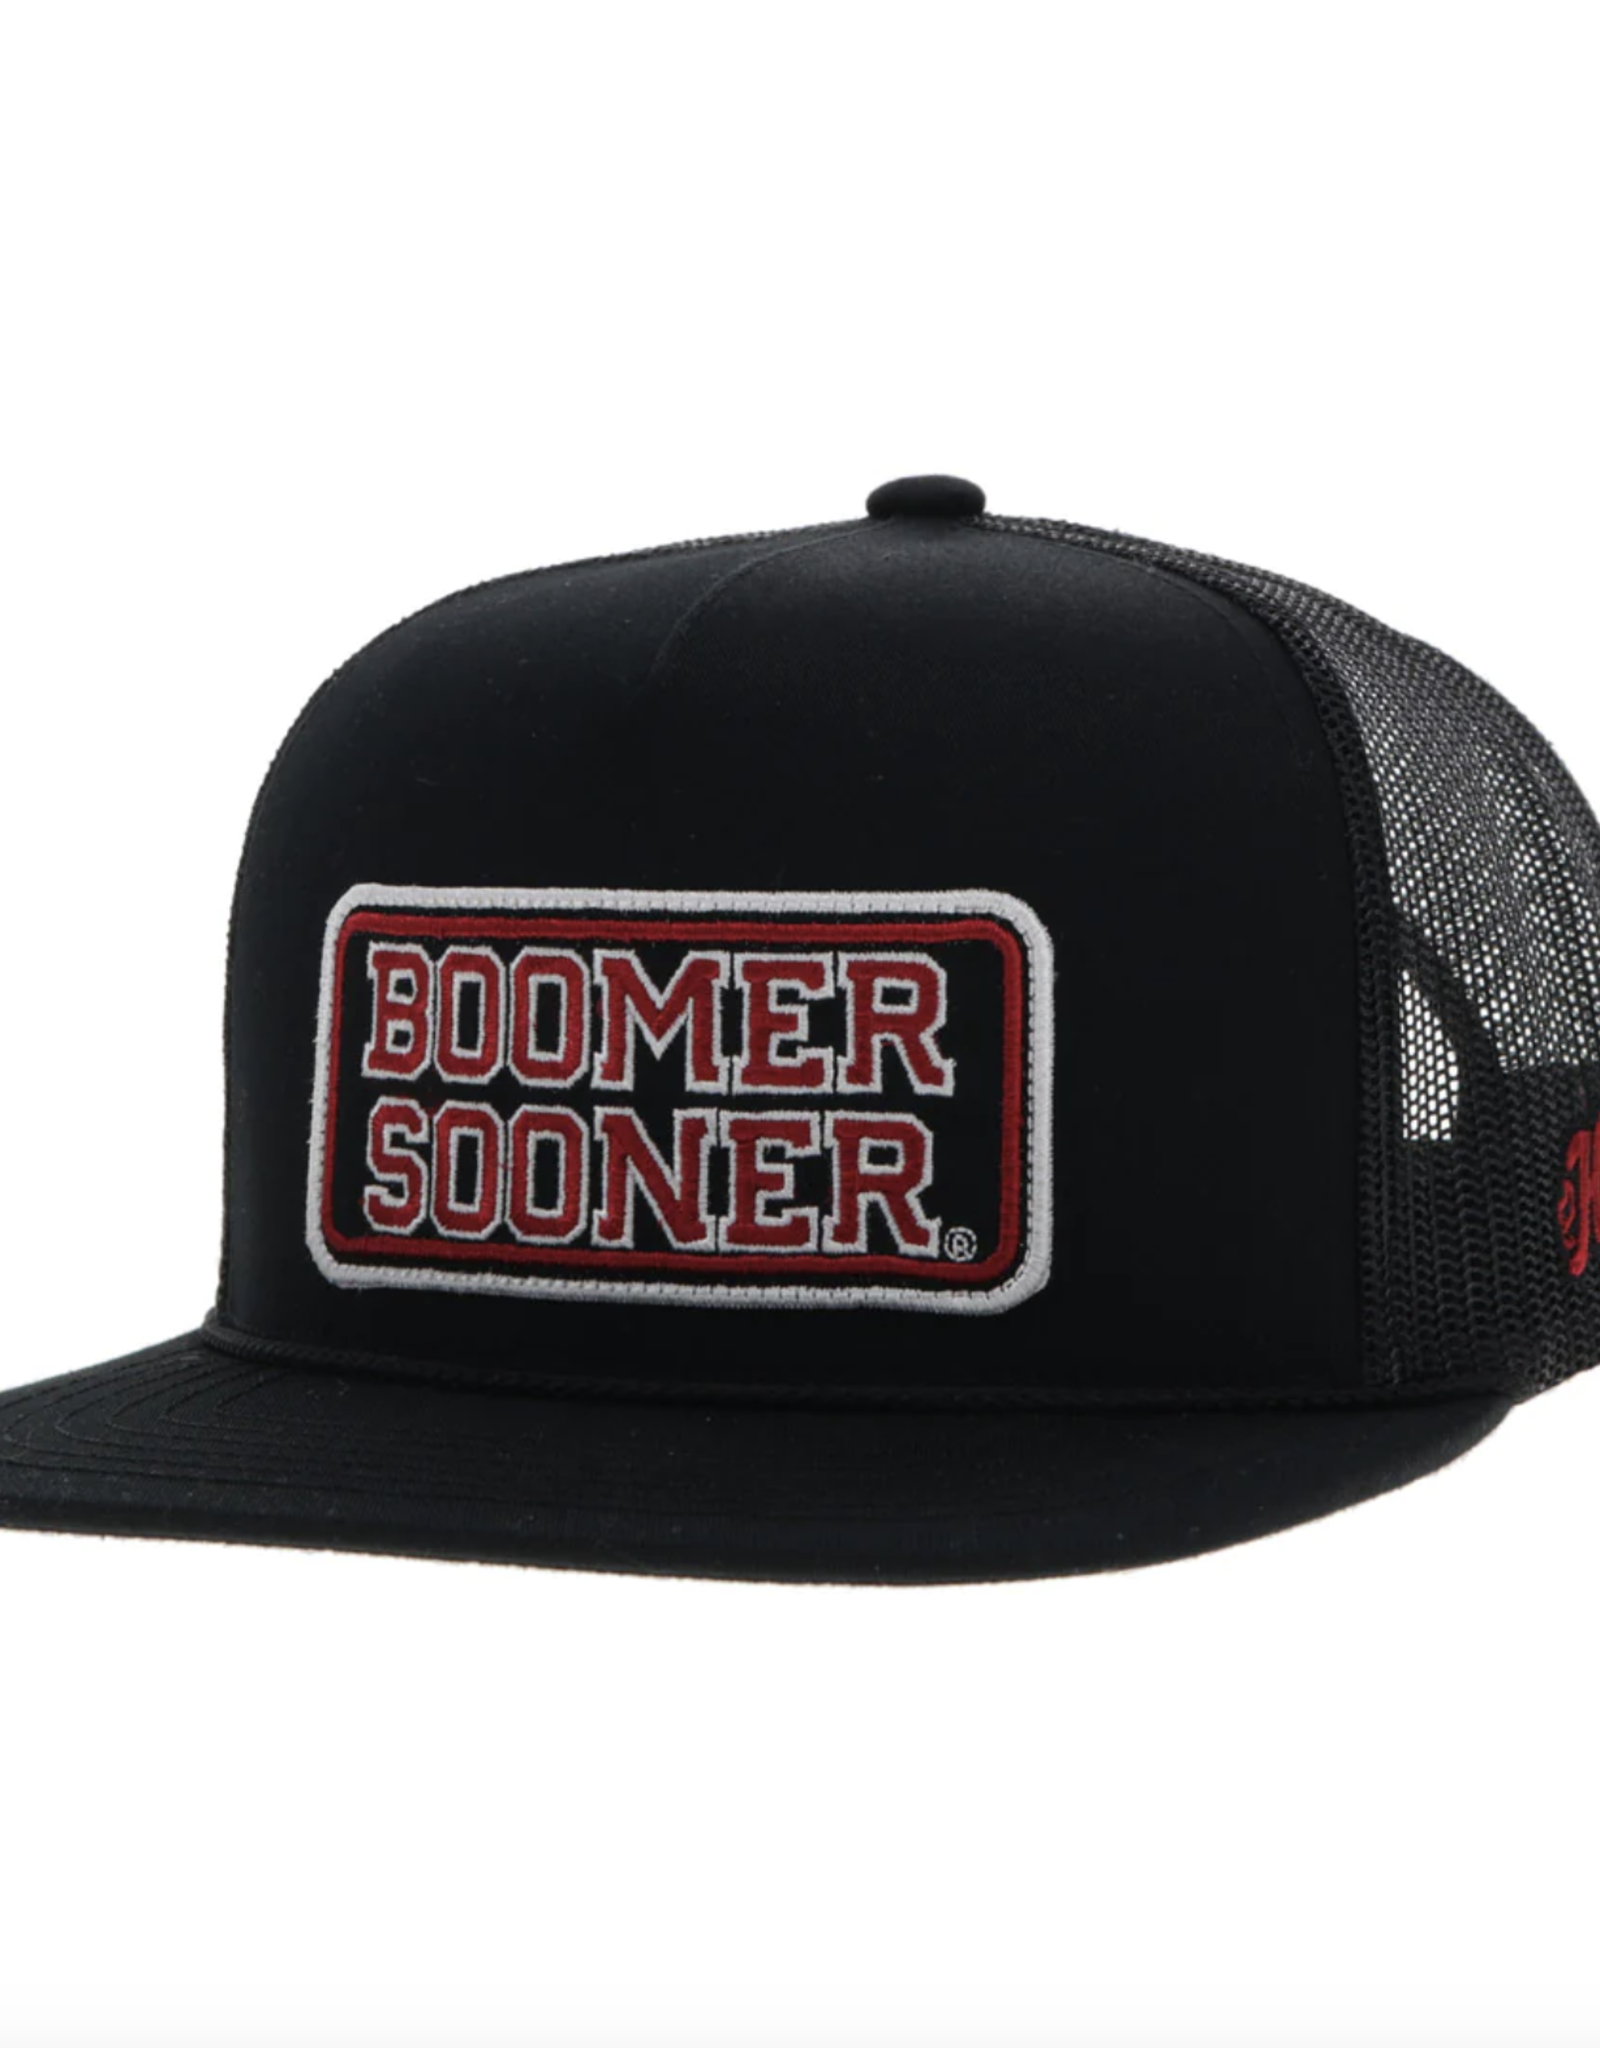 Hooey Boomer Sooner Patch Black Trucker Hooey Hat